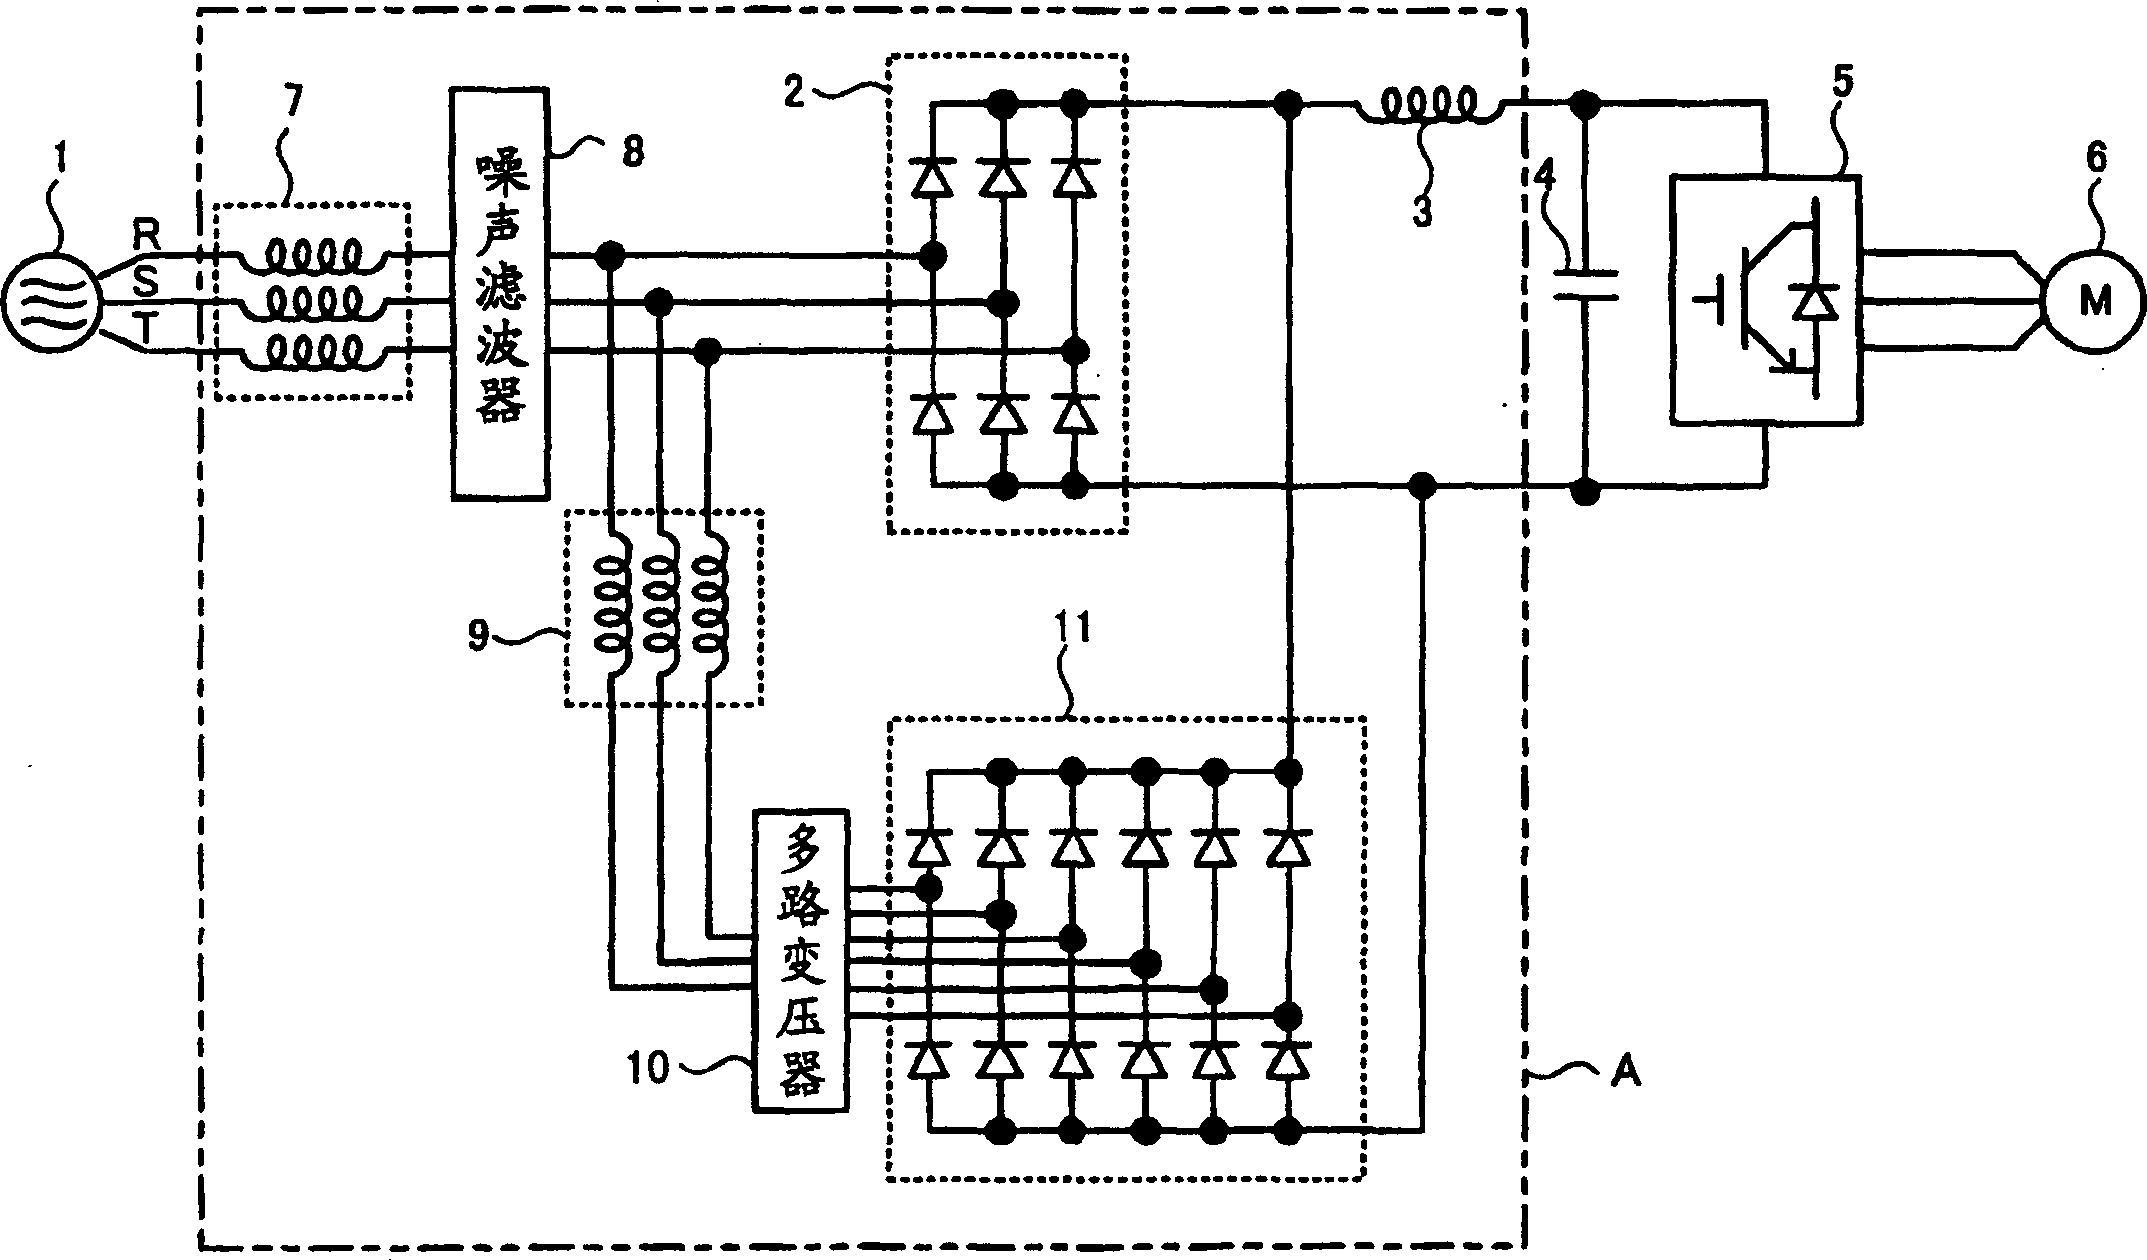 Multipath rectification circuit